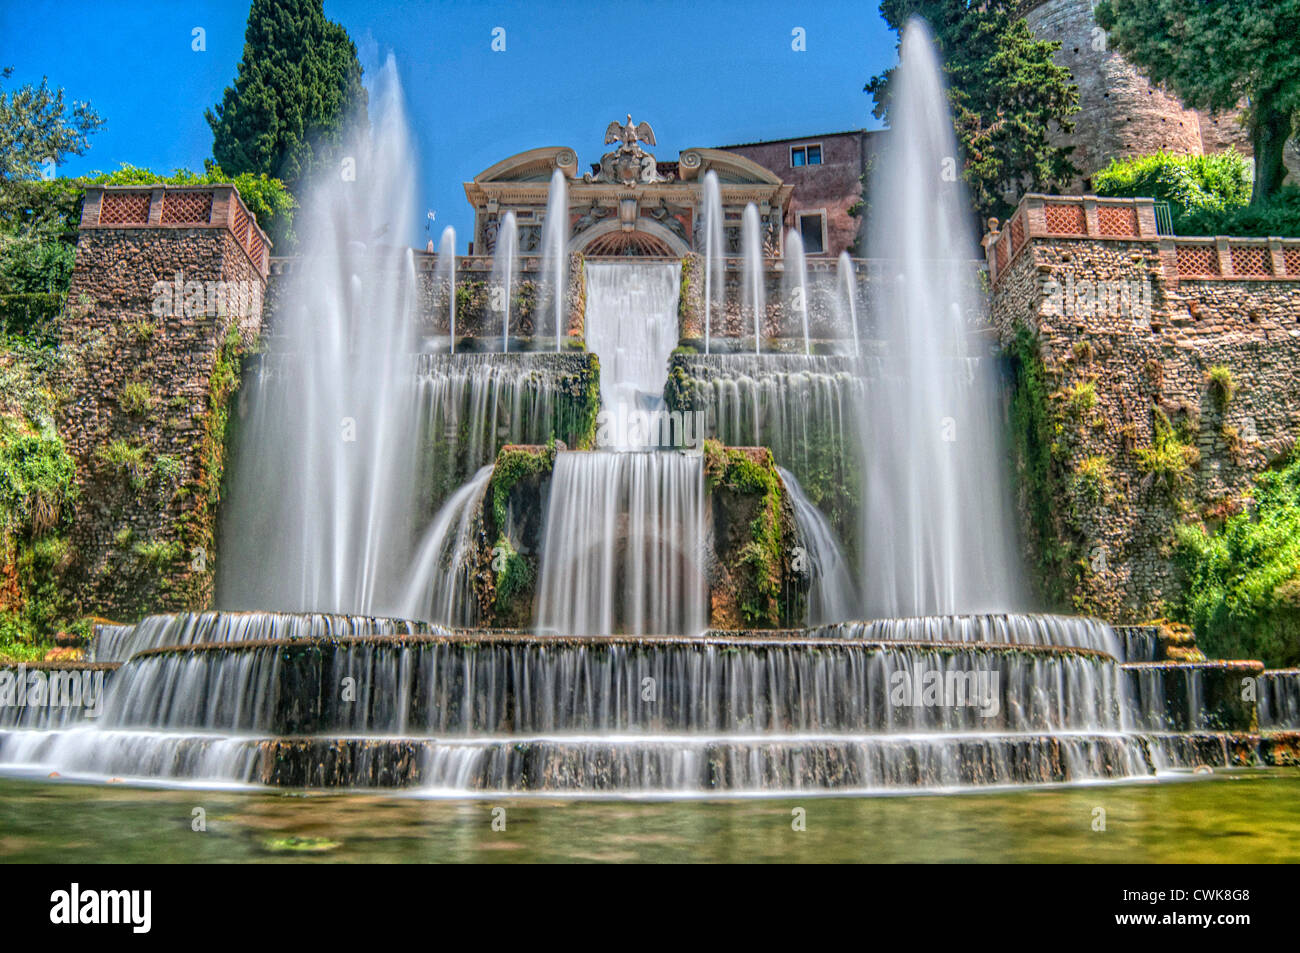 Villa d'este gardens hi-res stock photography and images - Alamy